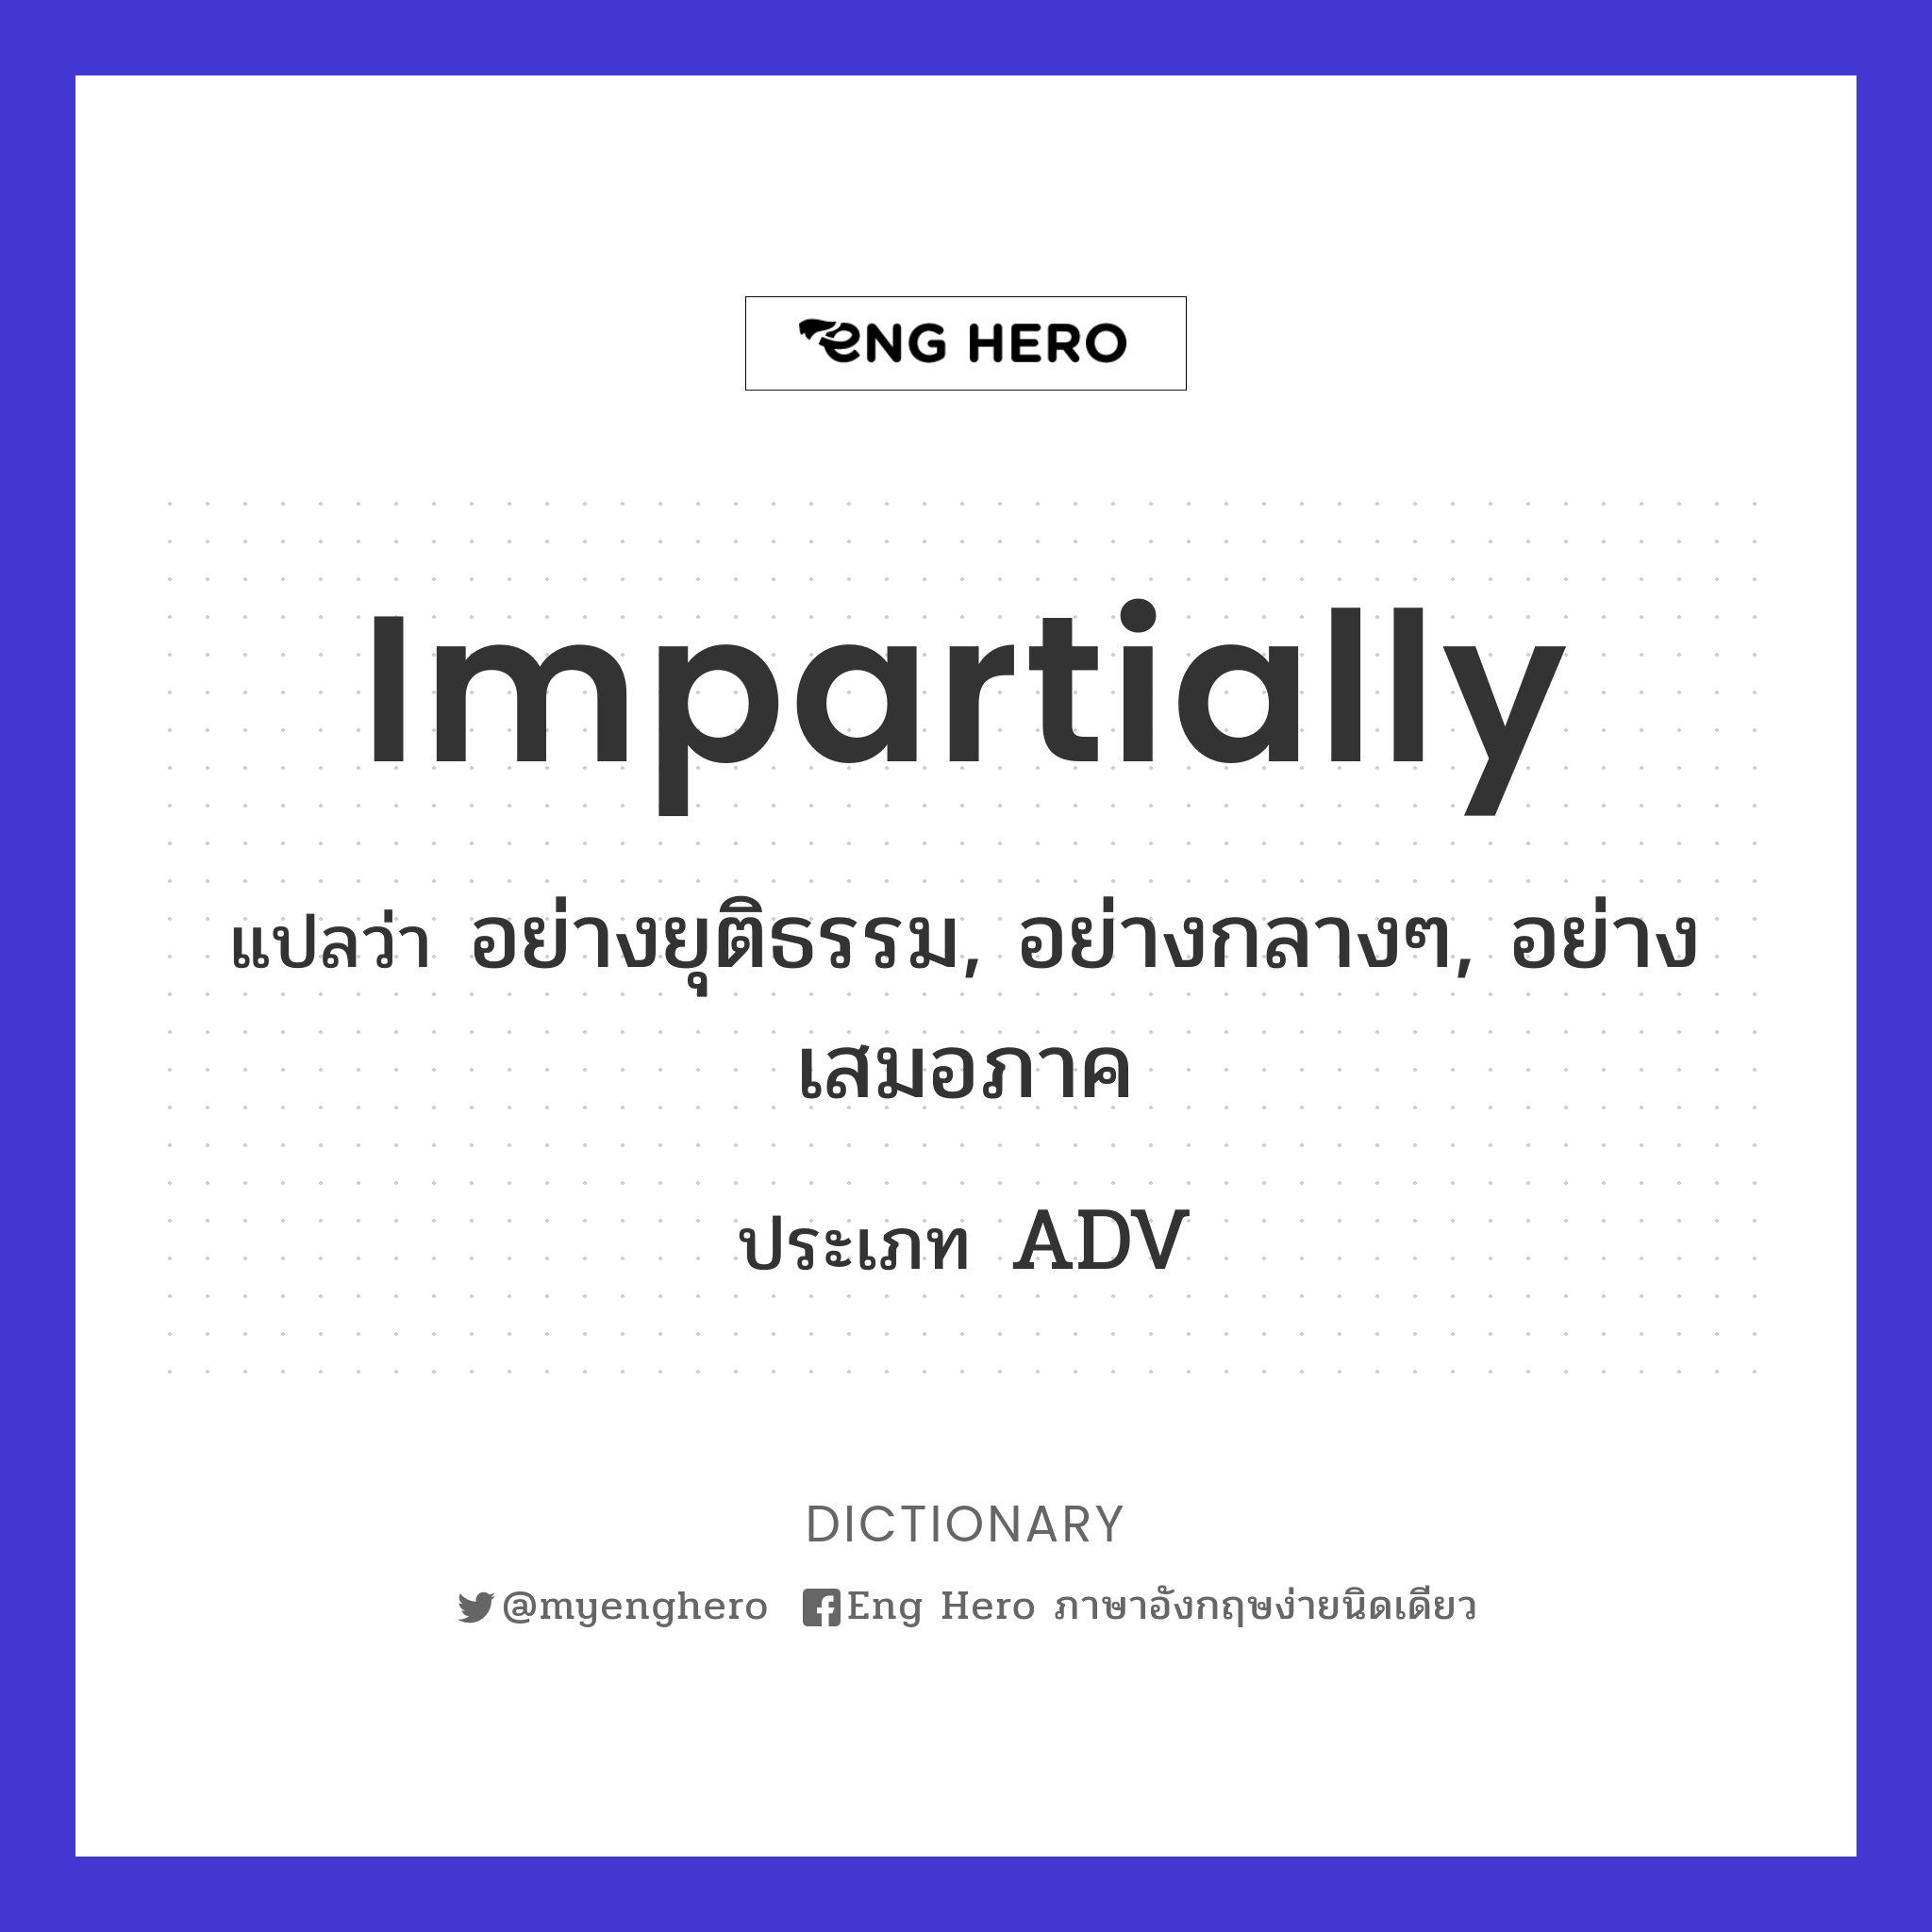 impartially